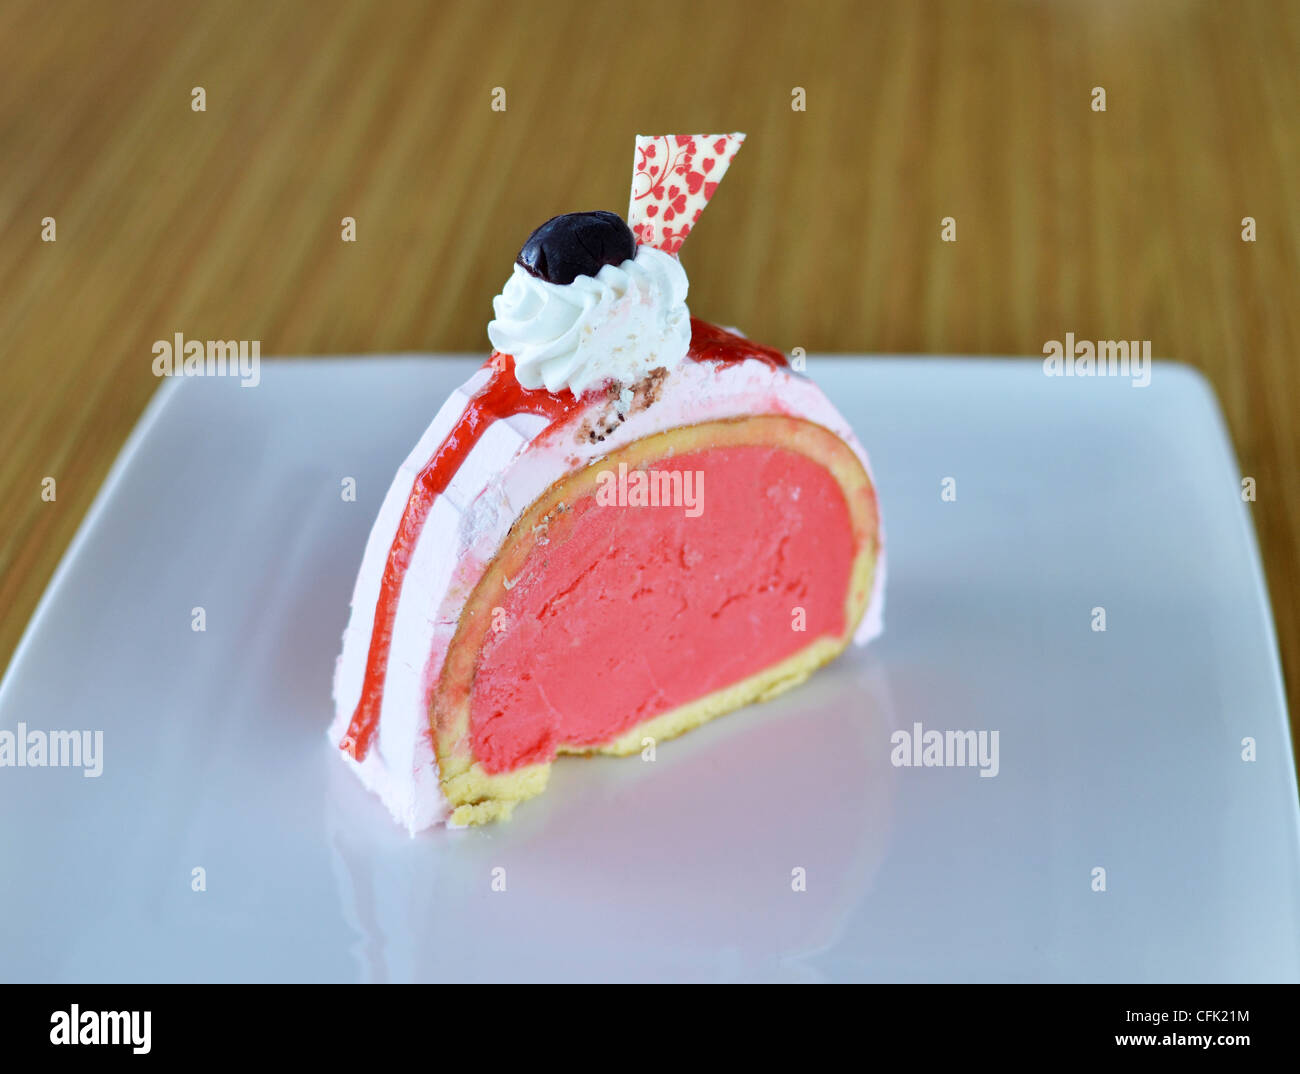 strawberry ice cream cake with whipped cream Stock Photo